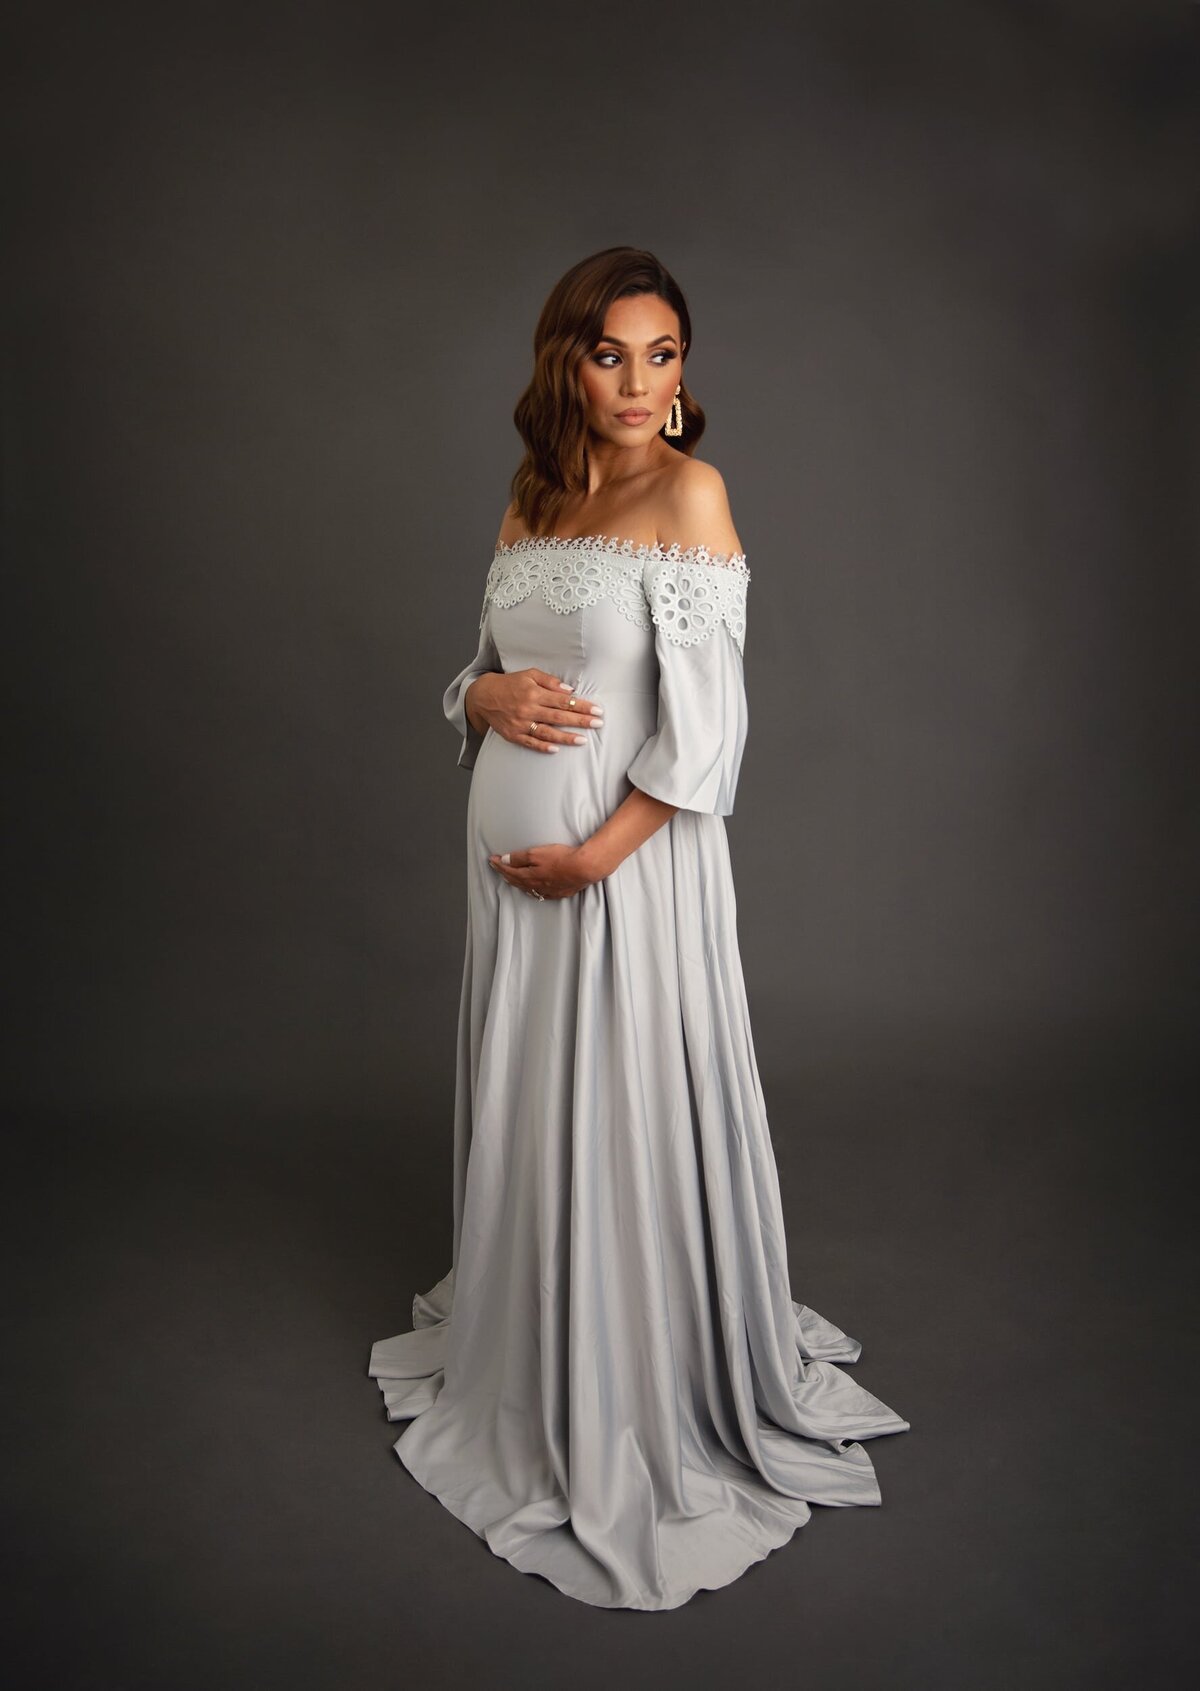 Maternity studio portrait silver dress